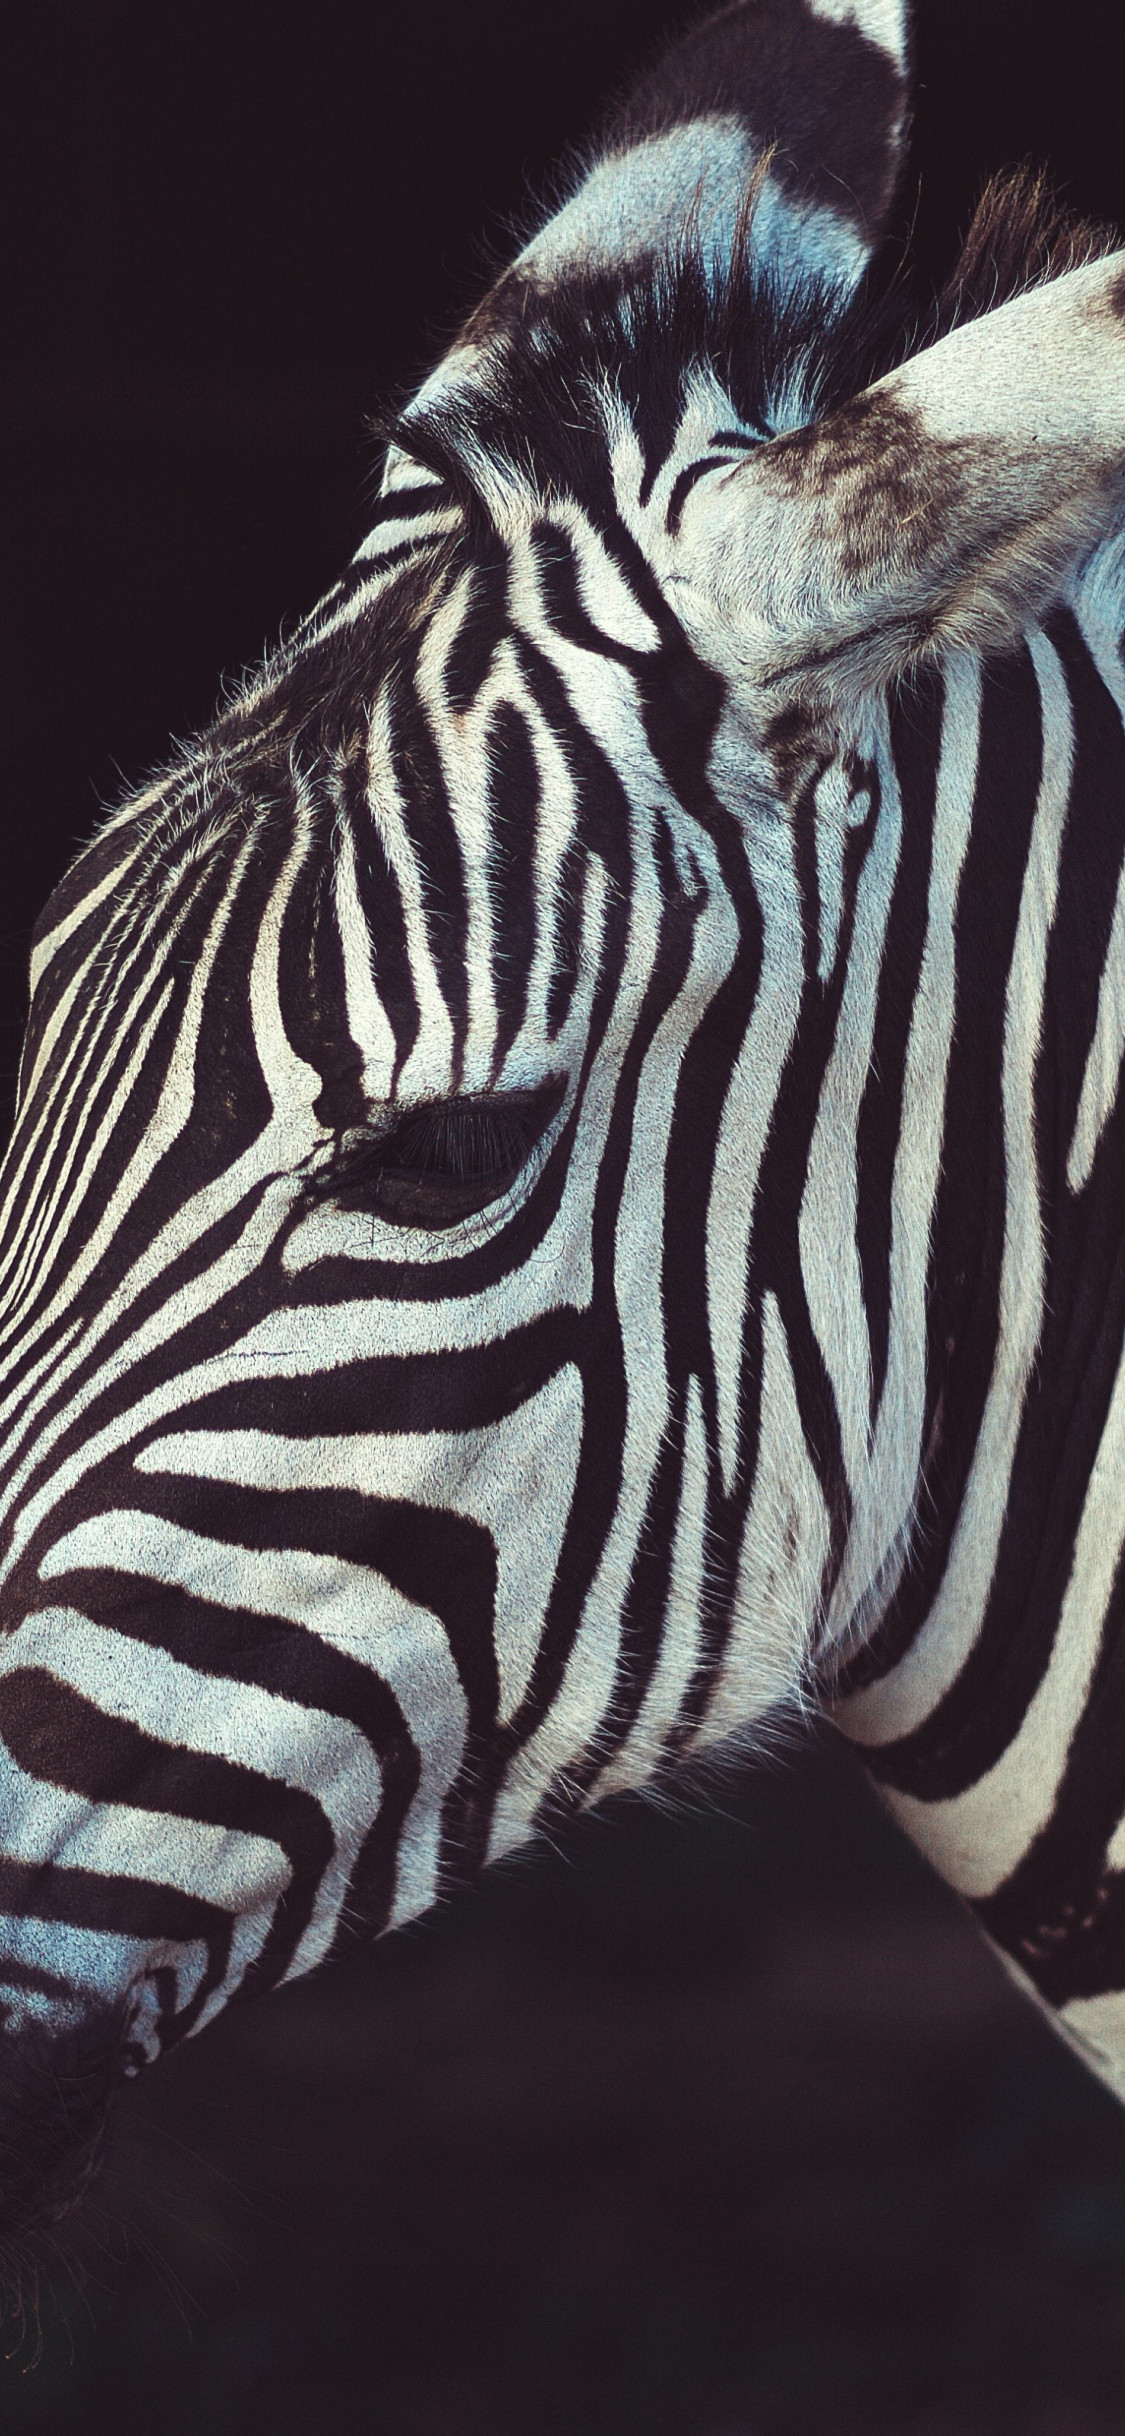 Zebra portrait from Greeneville Zoo, USA wallpaper 1125x2436